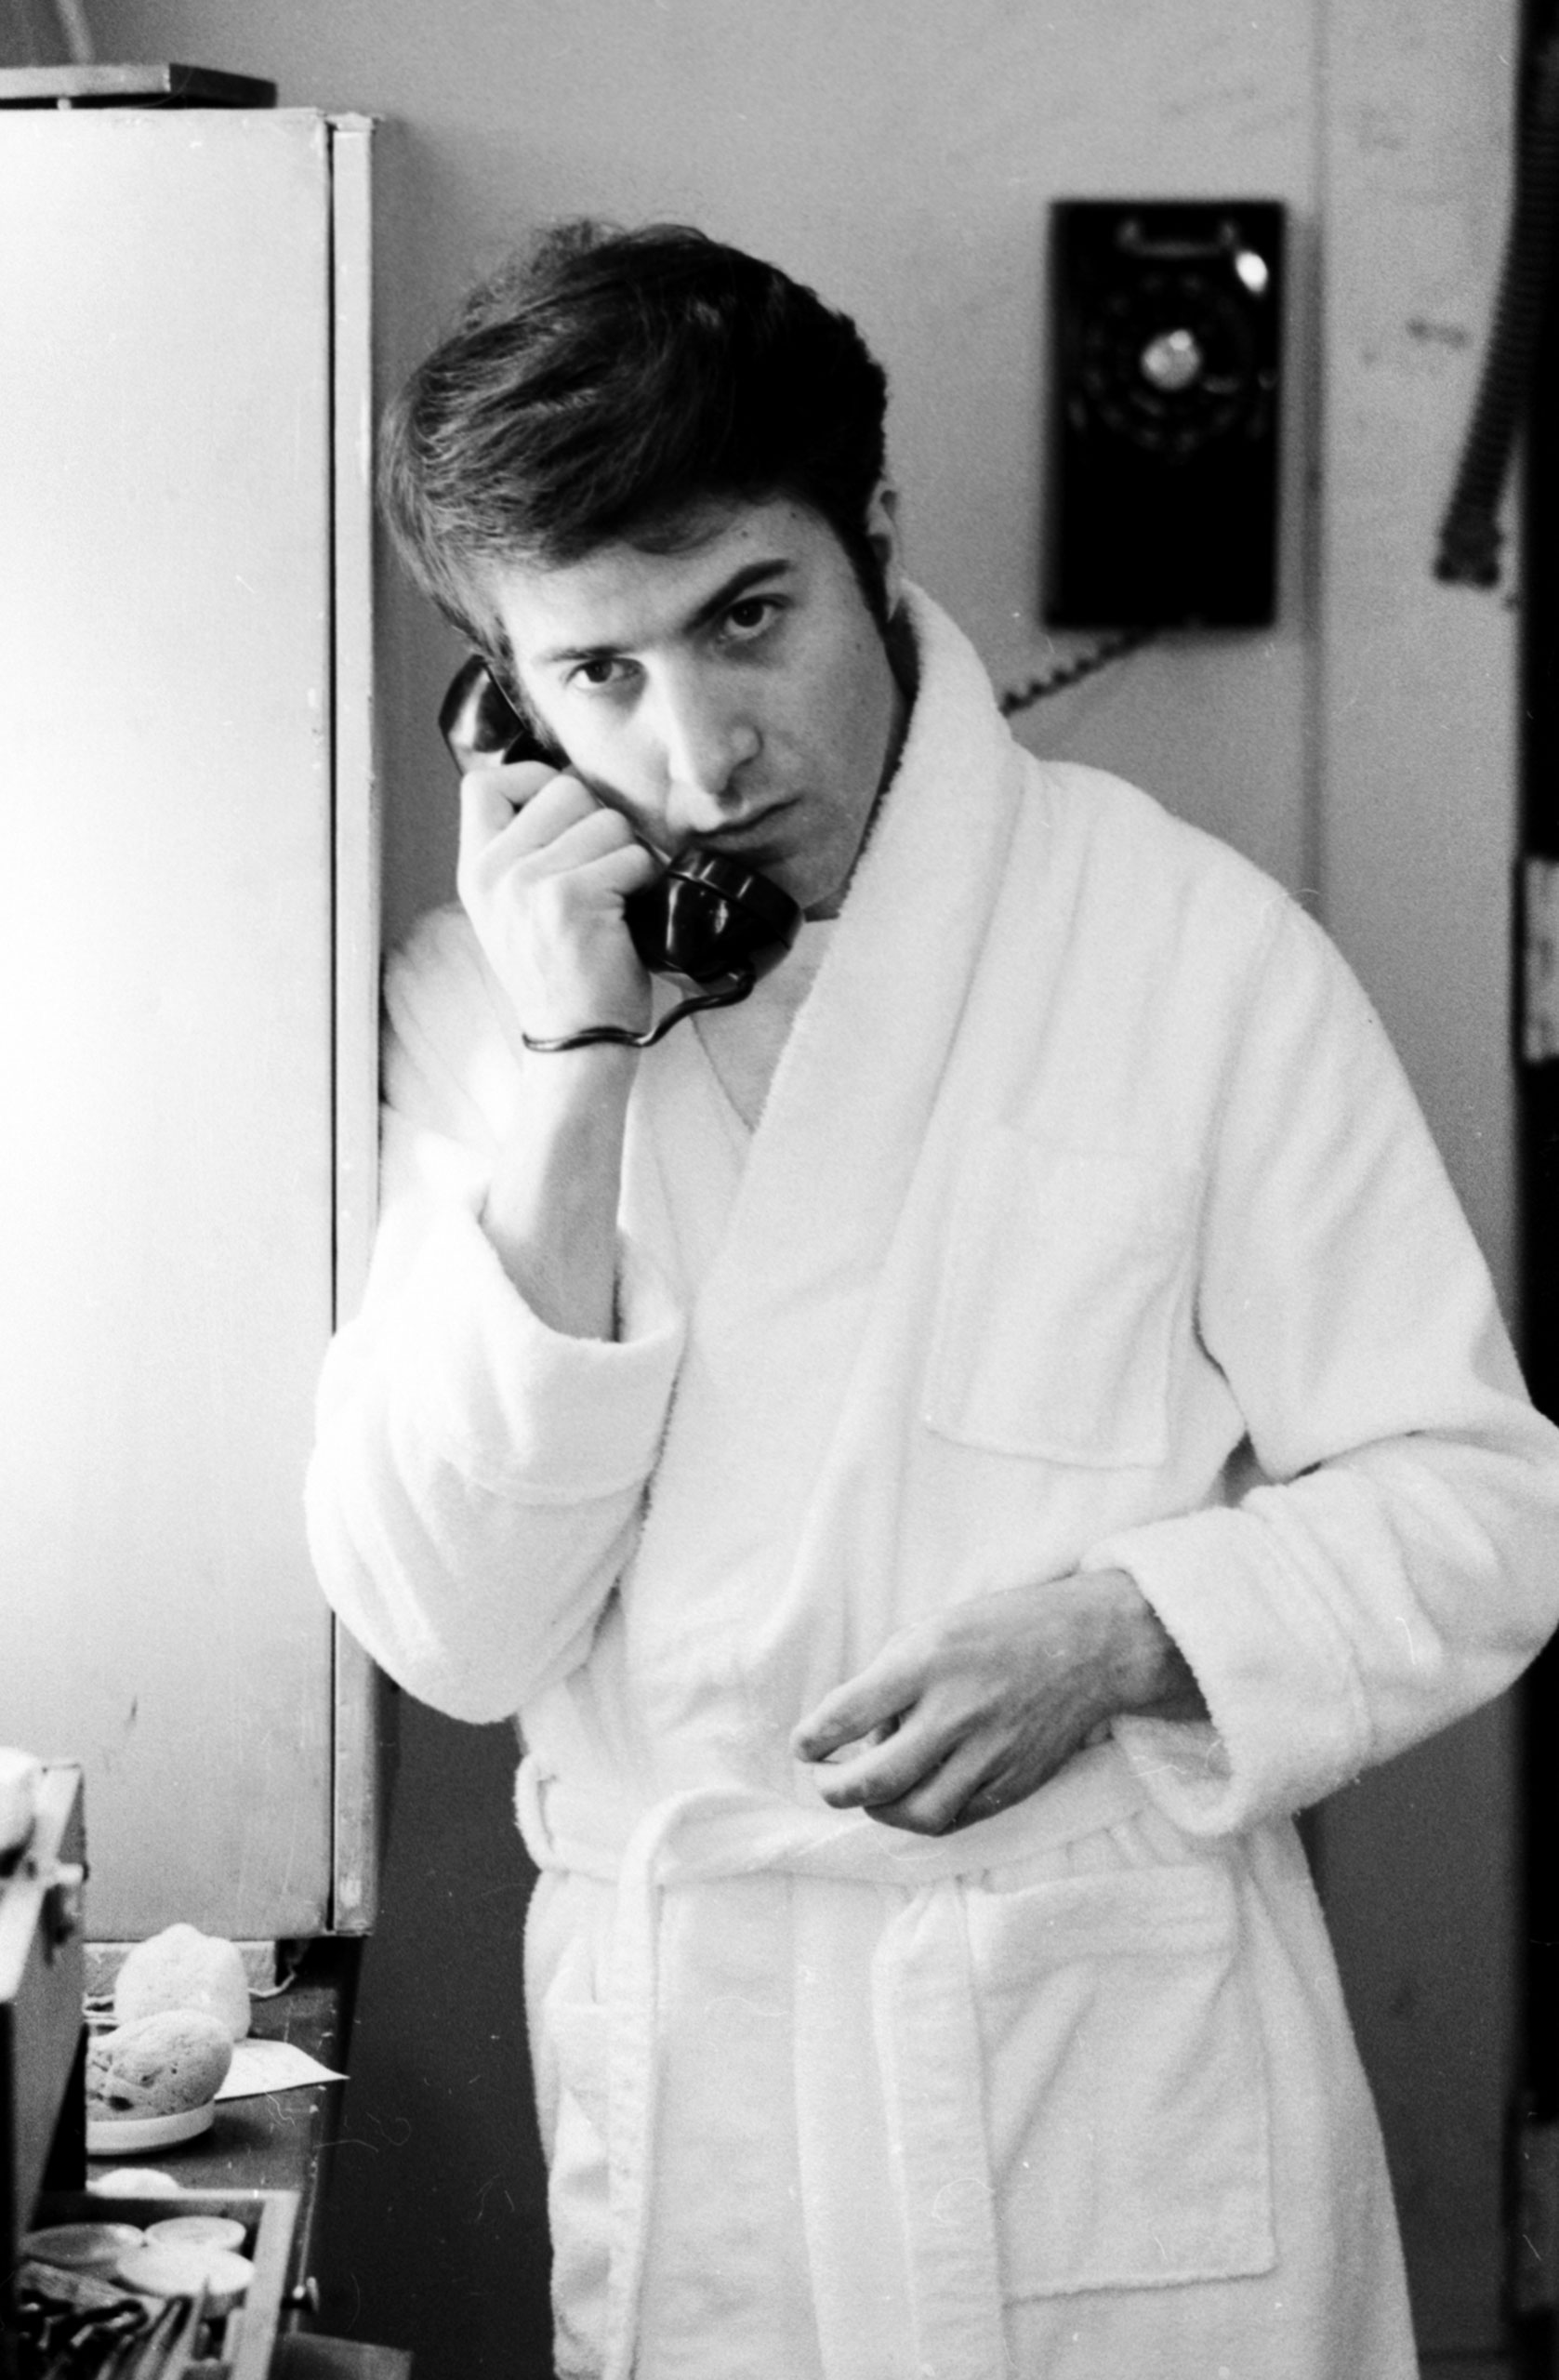 Dustin Hoffman on the phone, 1969.